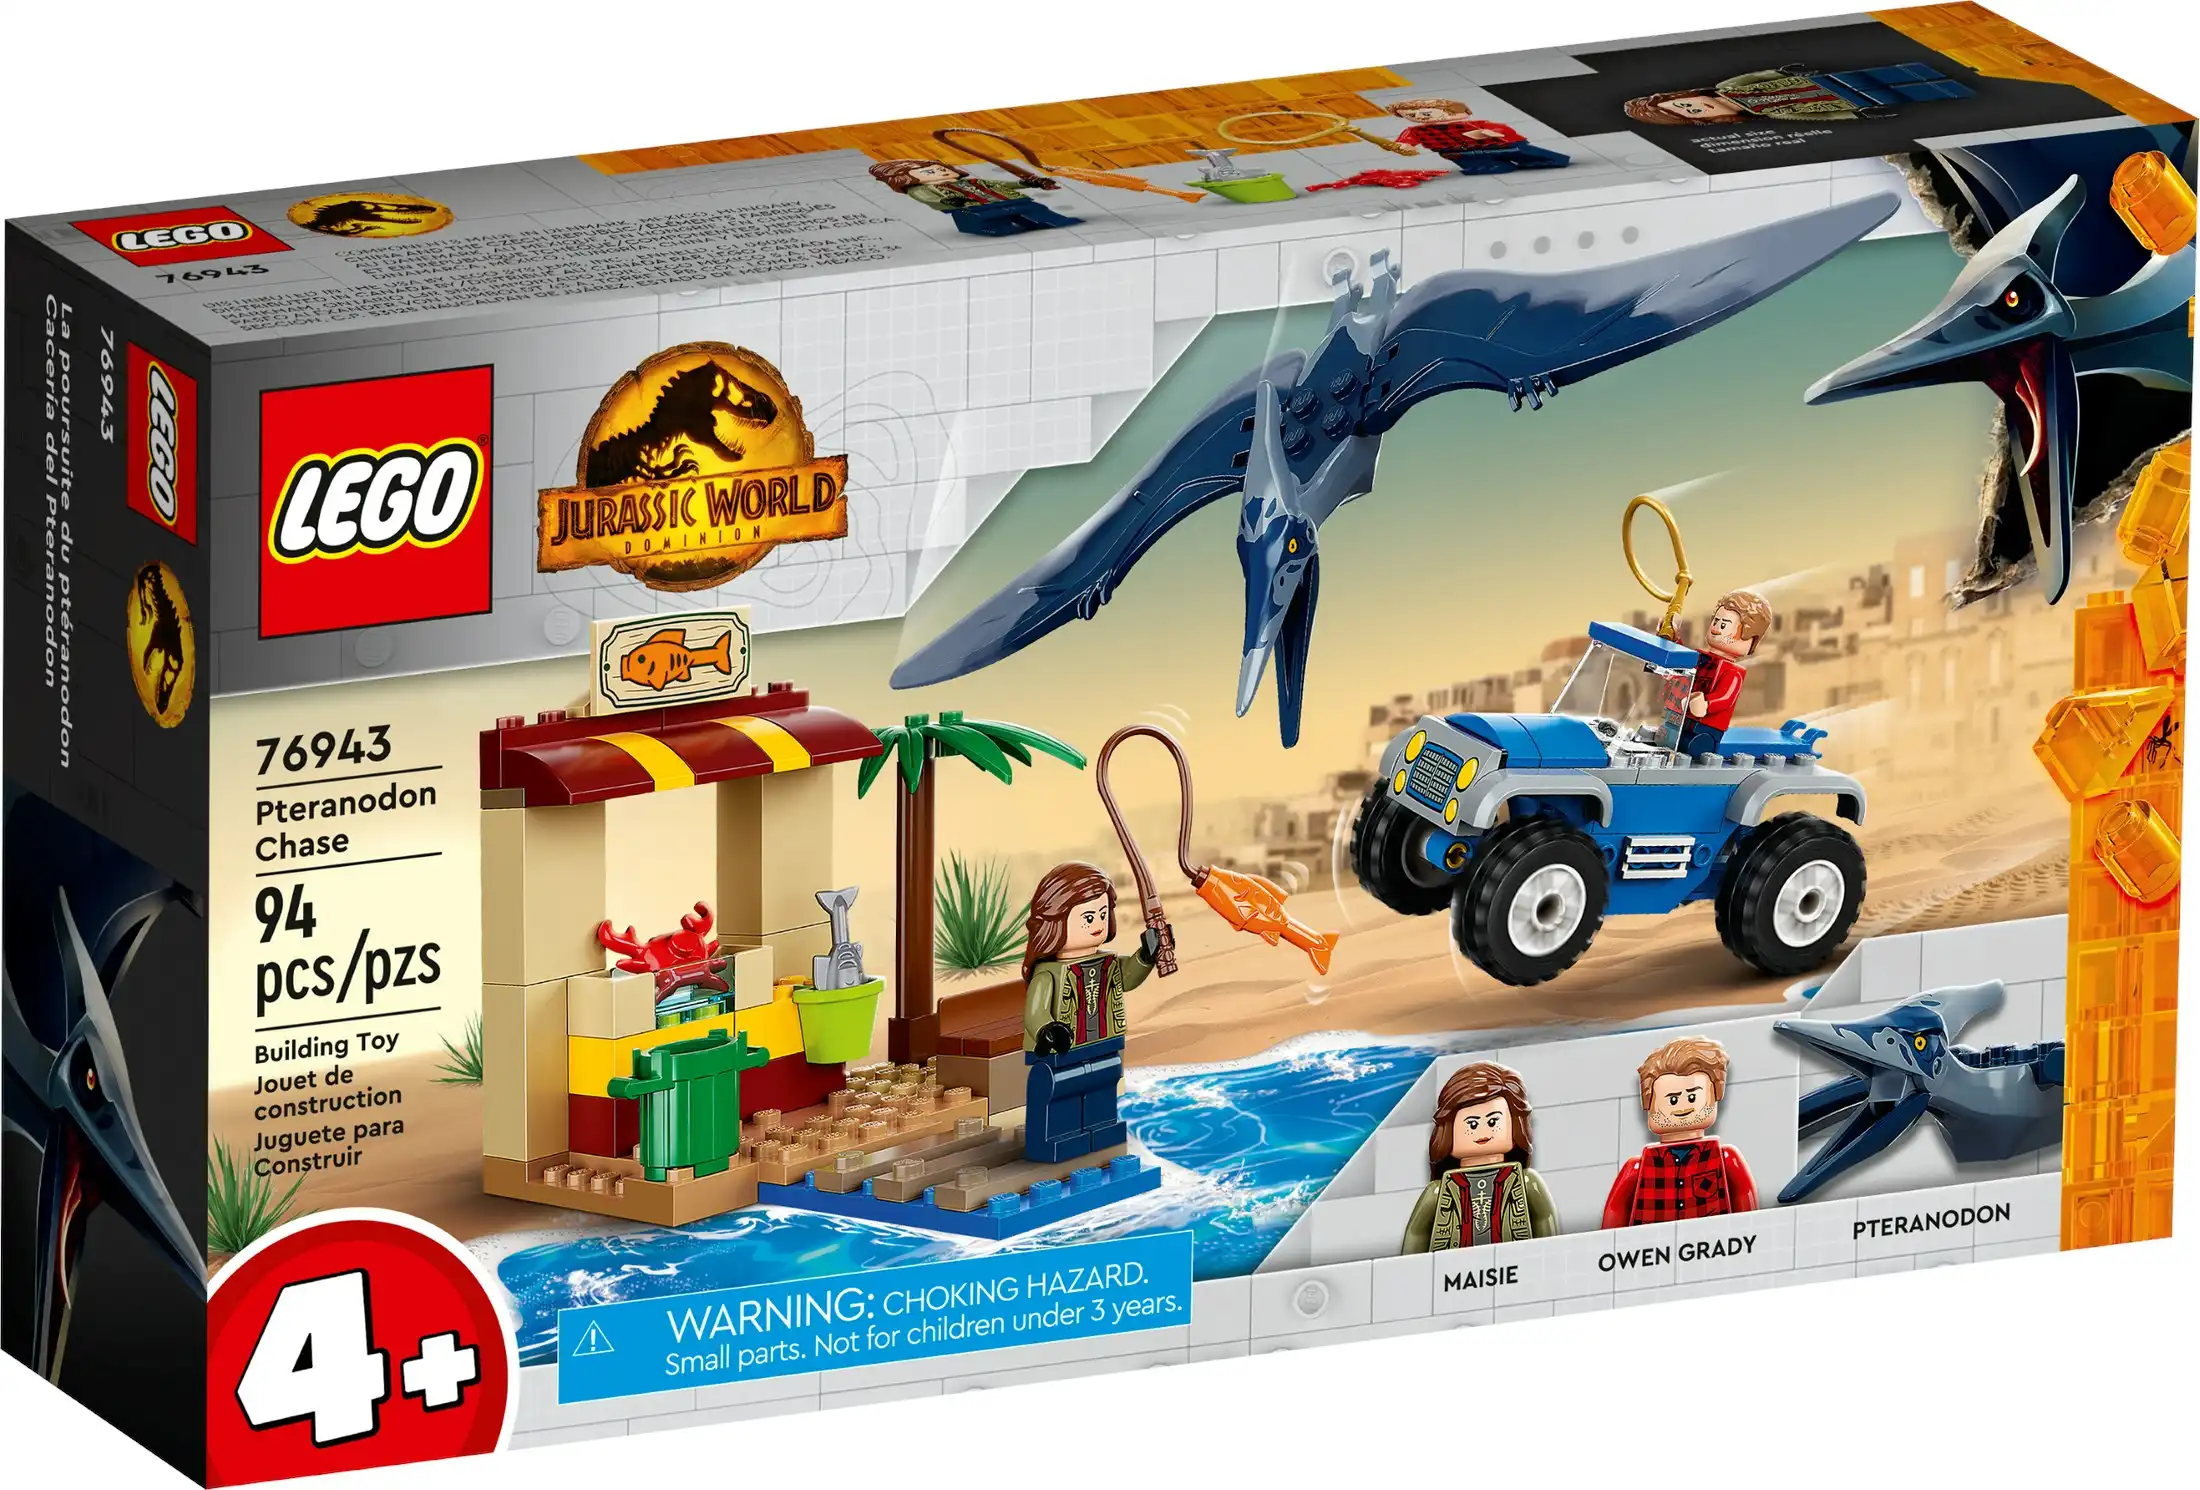 LEGO 76943 Pteranodon Chase - Jurassic World 4+